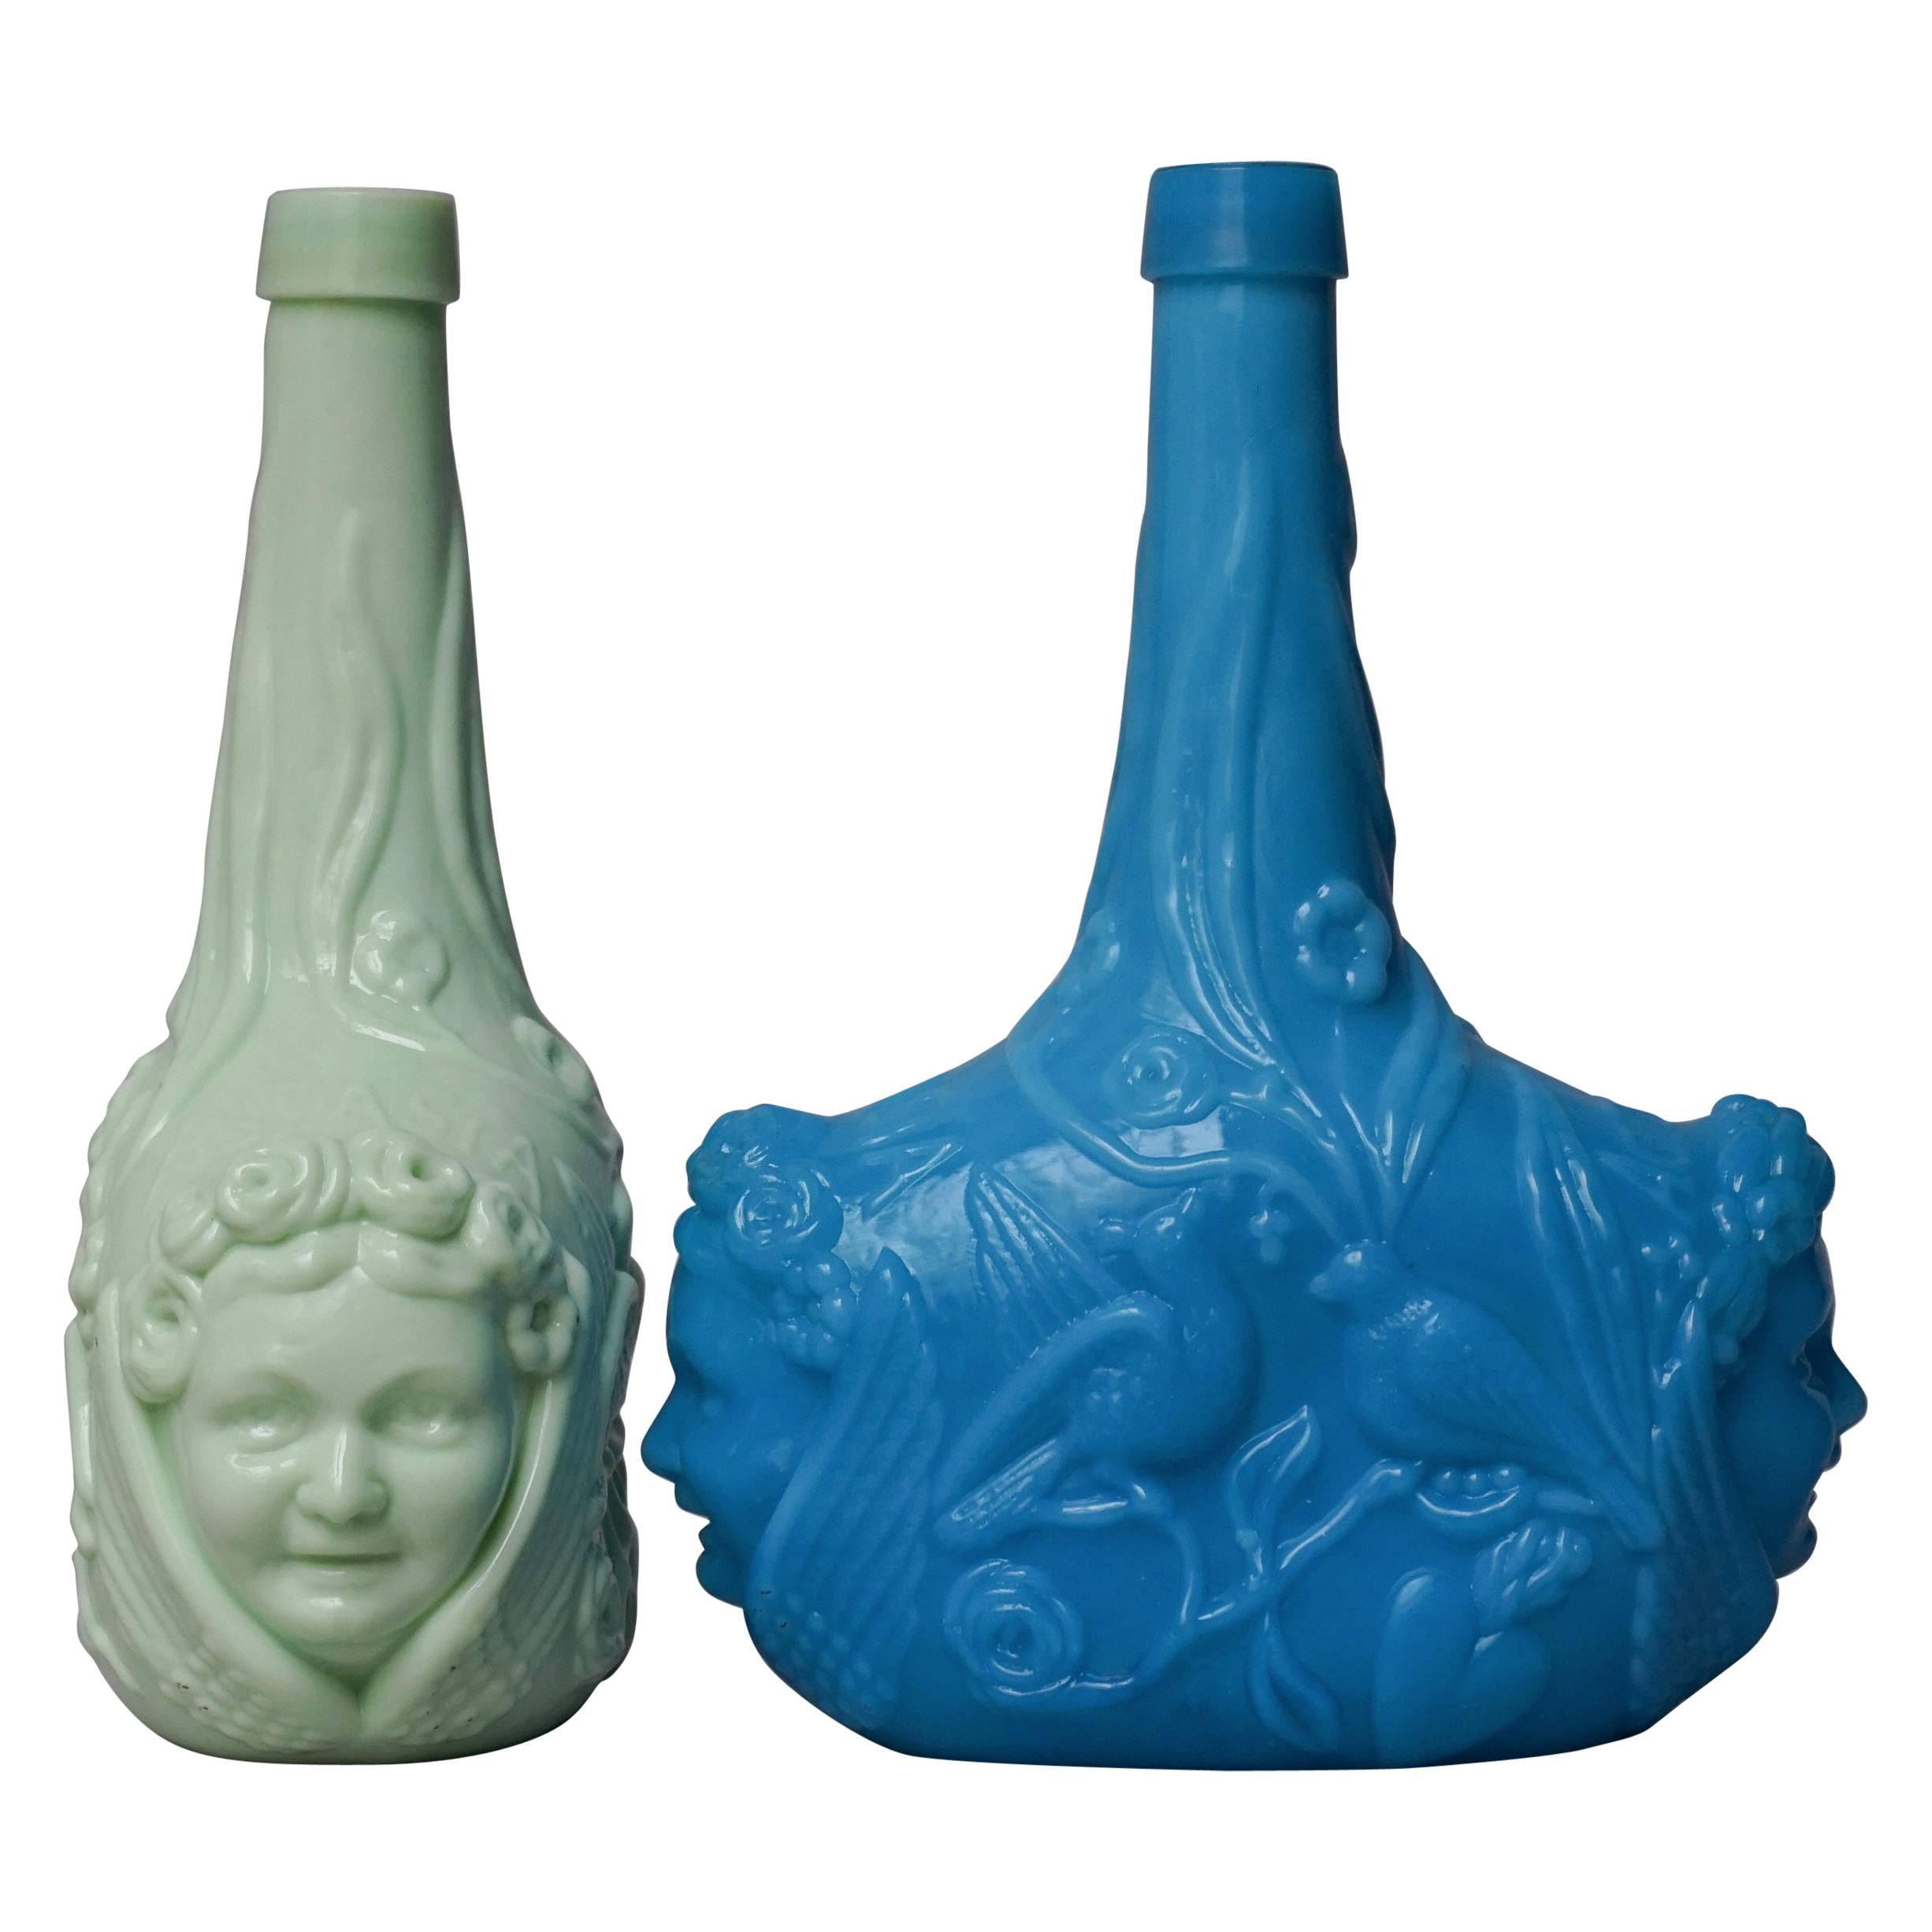 19th Century Opaline 'Milk' Glass Aspasia Salve Liquor Bottles in Blue and Sage For Sale